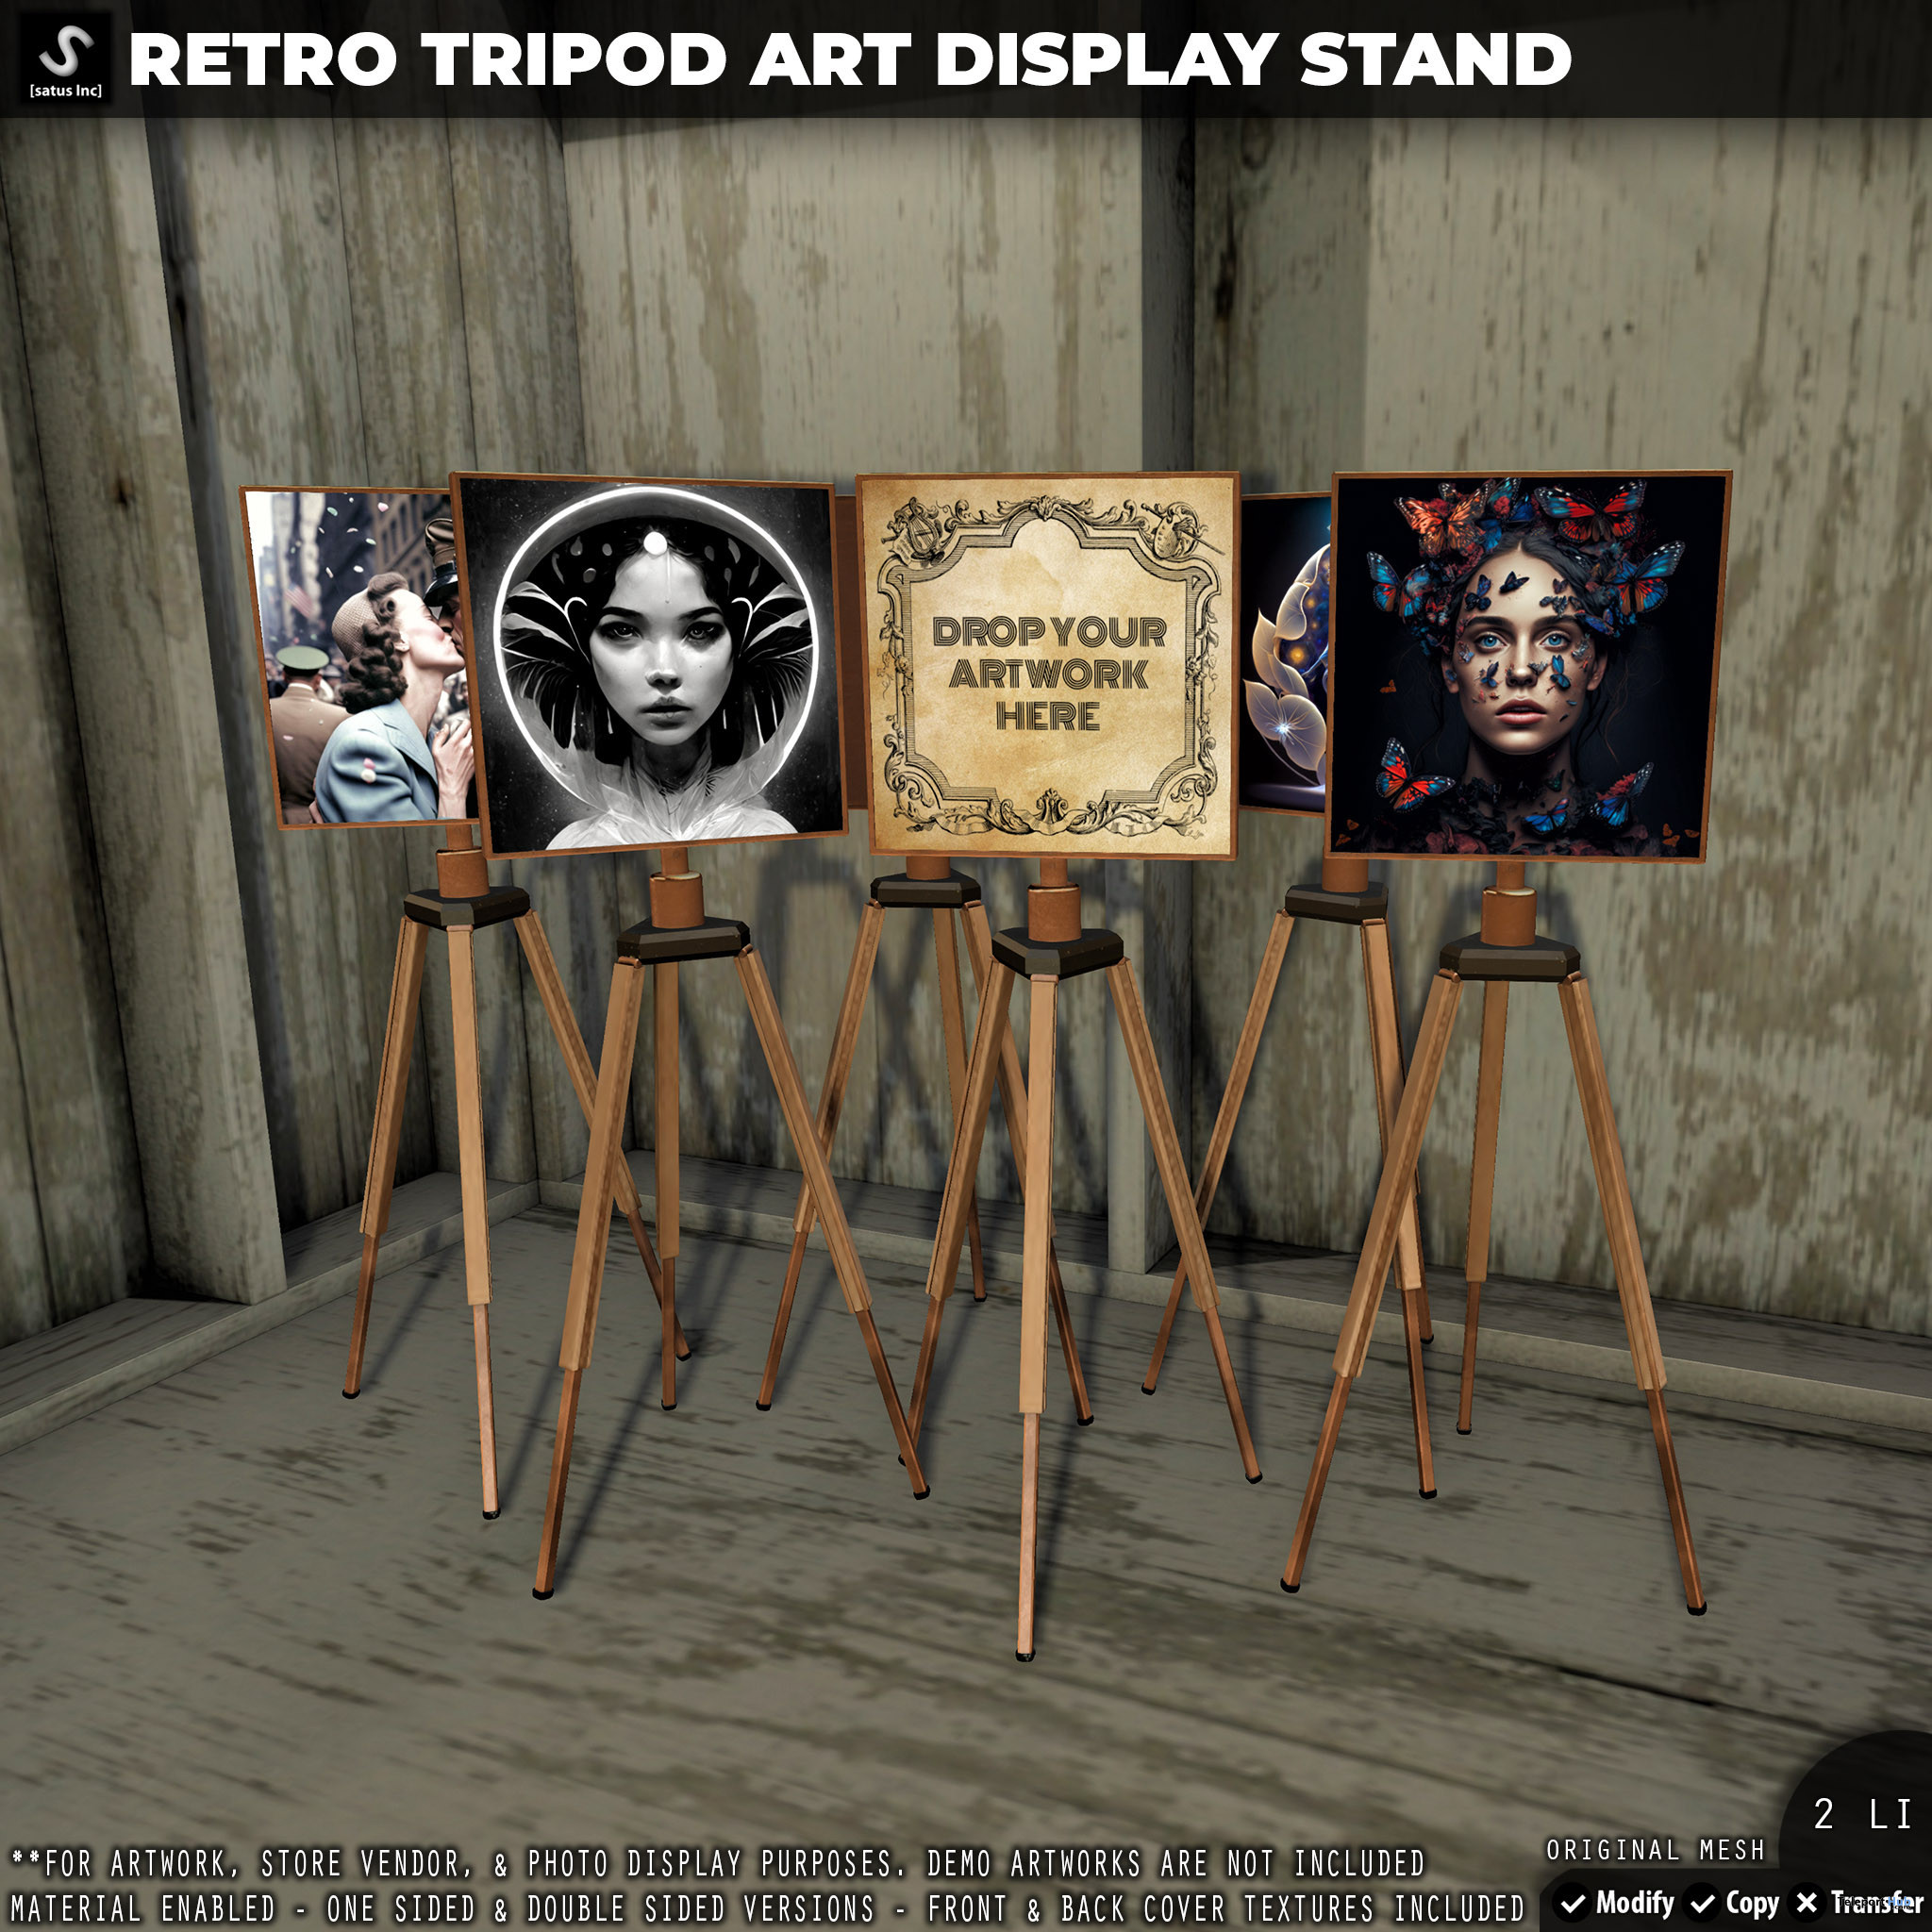 New Release: Retro Tripod Art Display Stand by [satus Inc] - Teleport Hub - teleporthub.com